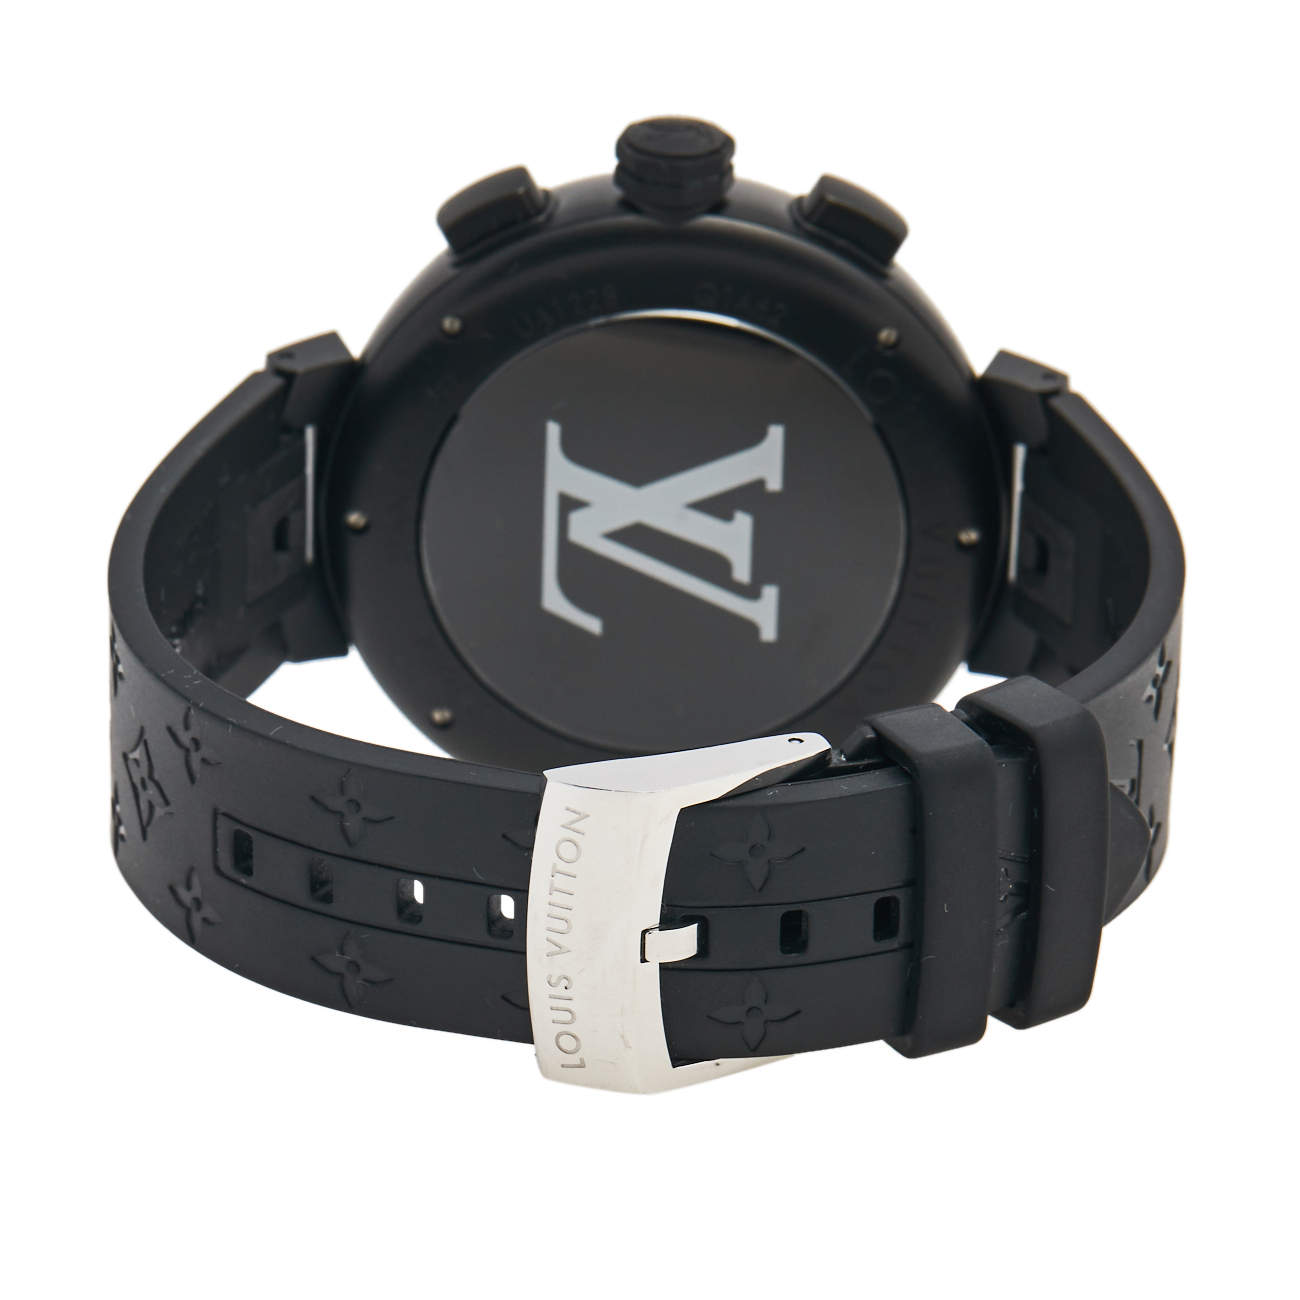 Authenticated used Louis Vuitton Louis Vuitton Tambour Chrono All Black Q1A62 Men's Ss/Rubber Watch Automatic Black/Gray Dial, Size: Case Diameter